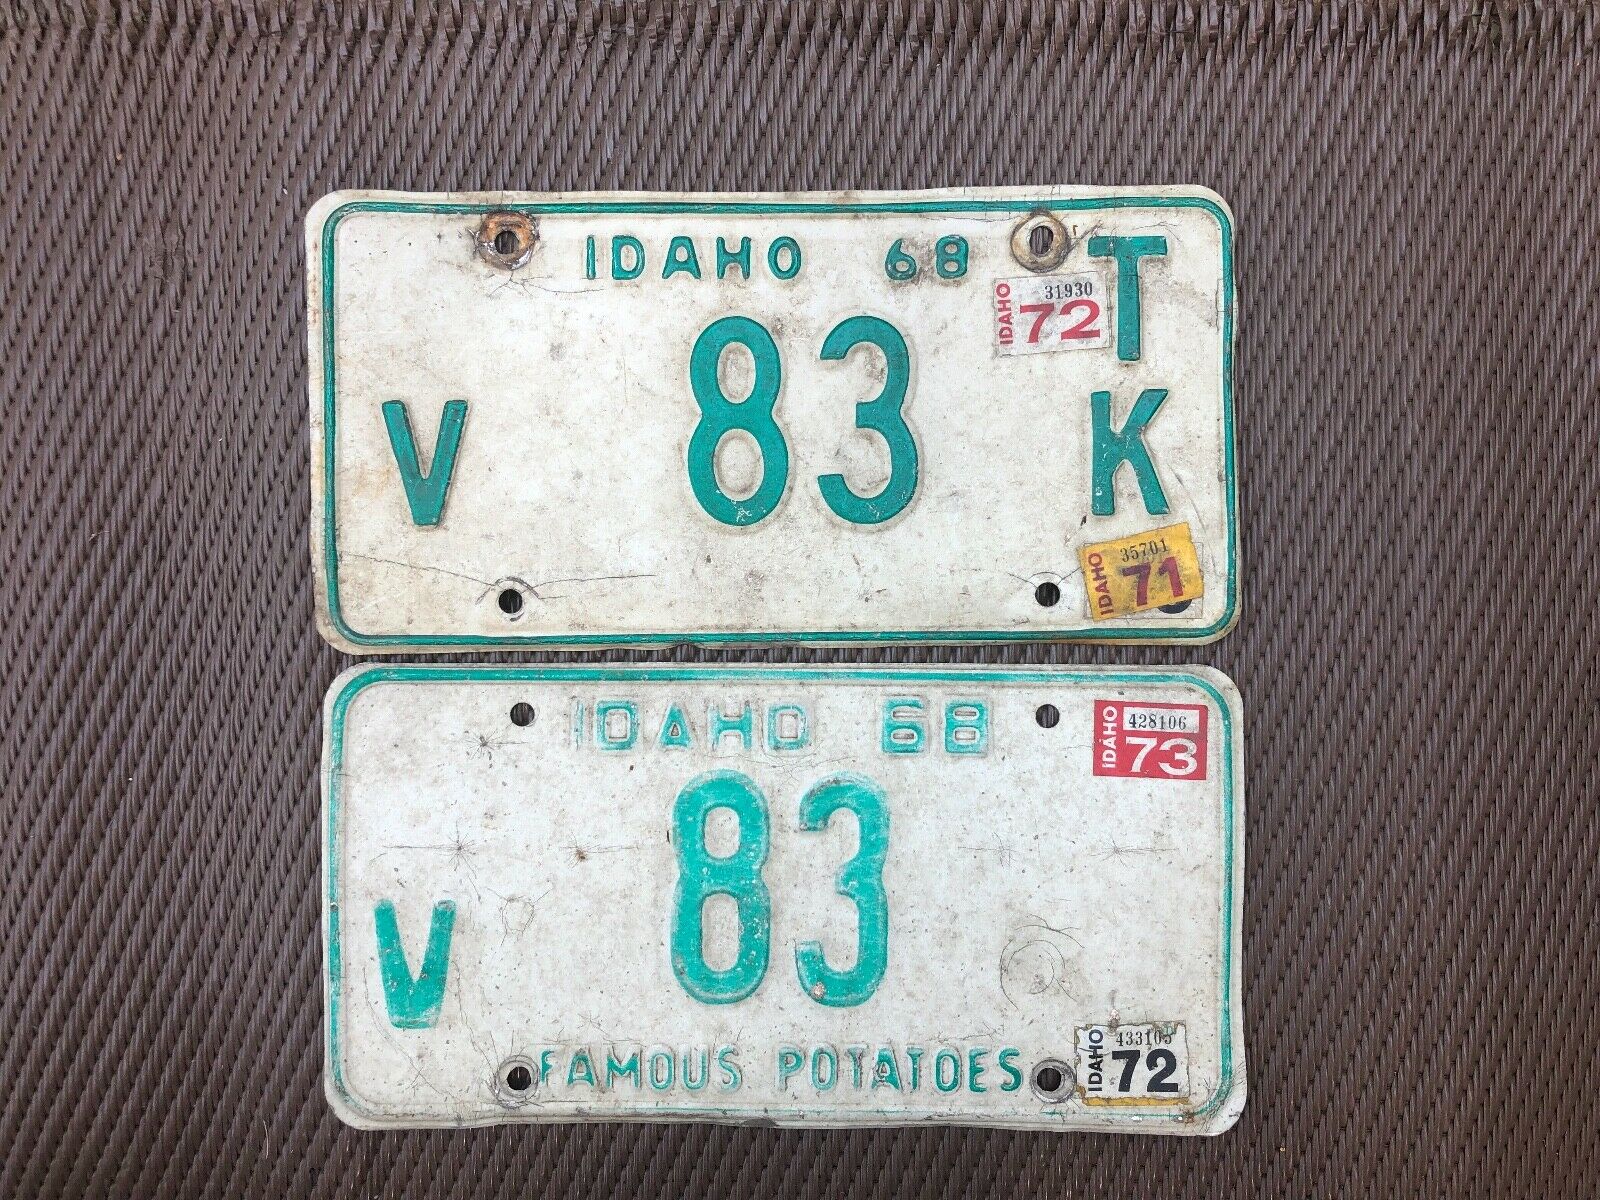 Vintage License Plate Idaho 1968